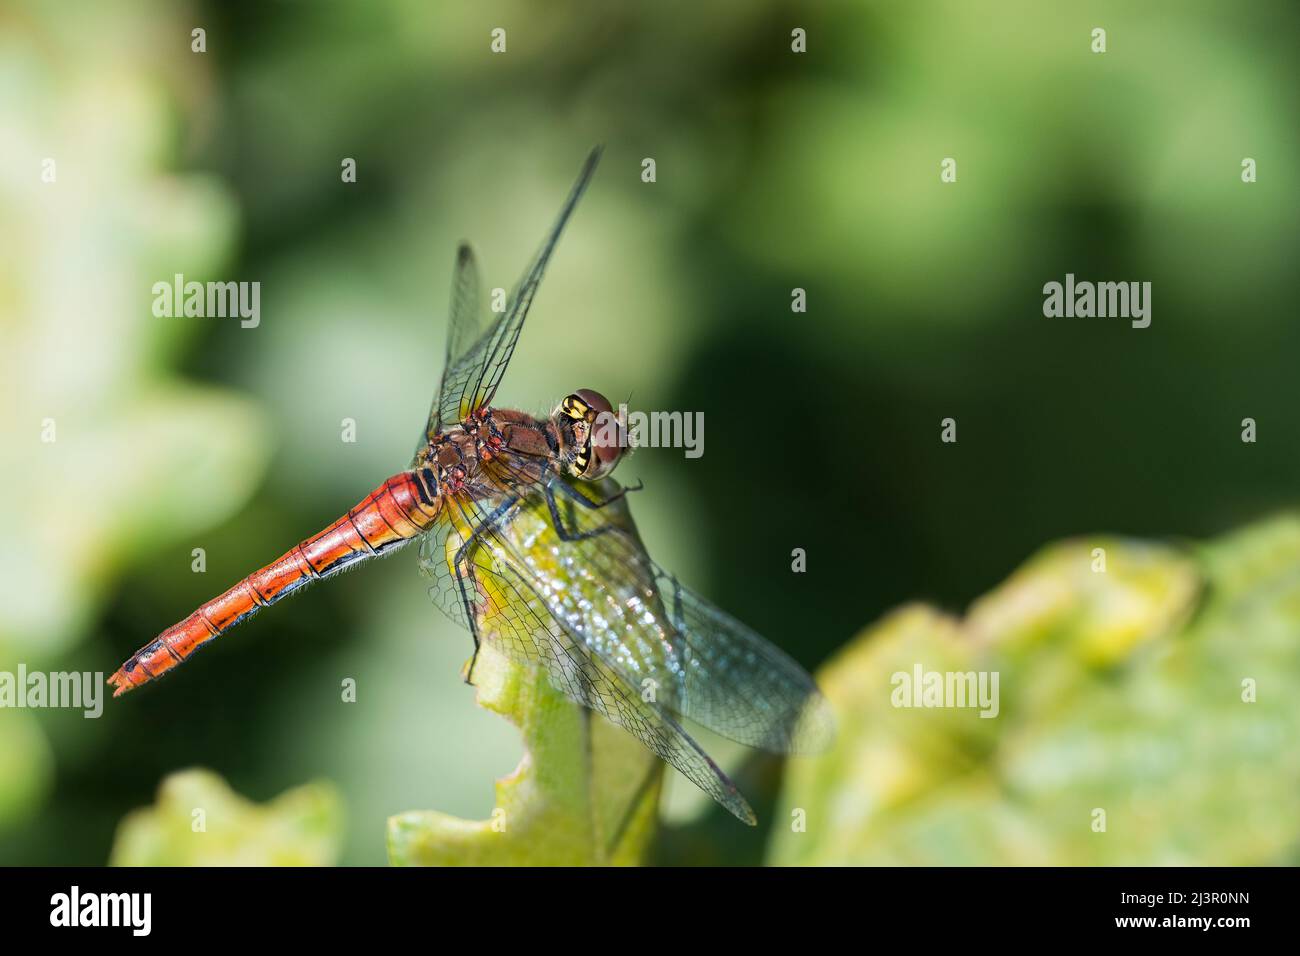 Hombre rudoso darter libélula sobre hoja verde con fondo natural borroso. Sympetrum sanguineum. Primer plano de hermoso insecto acuático con alas de propagación. Foto de stock